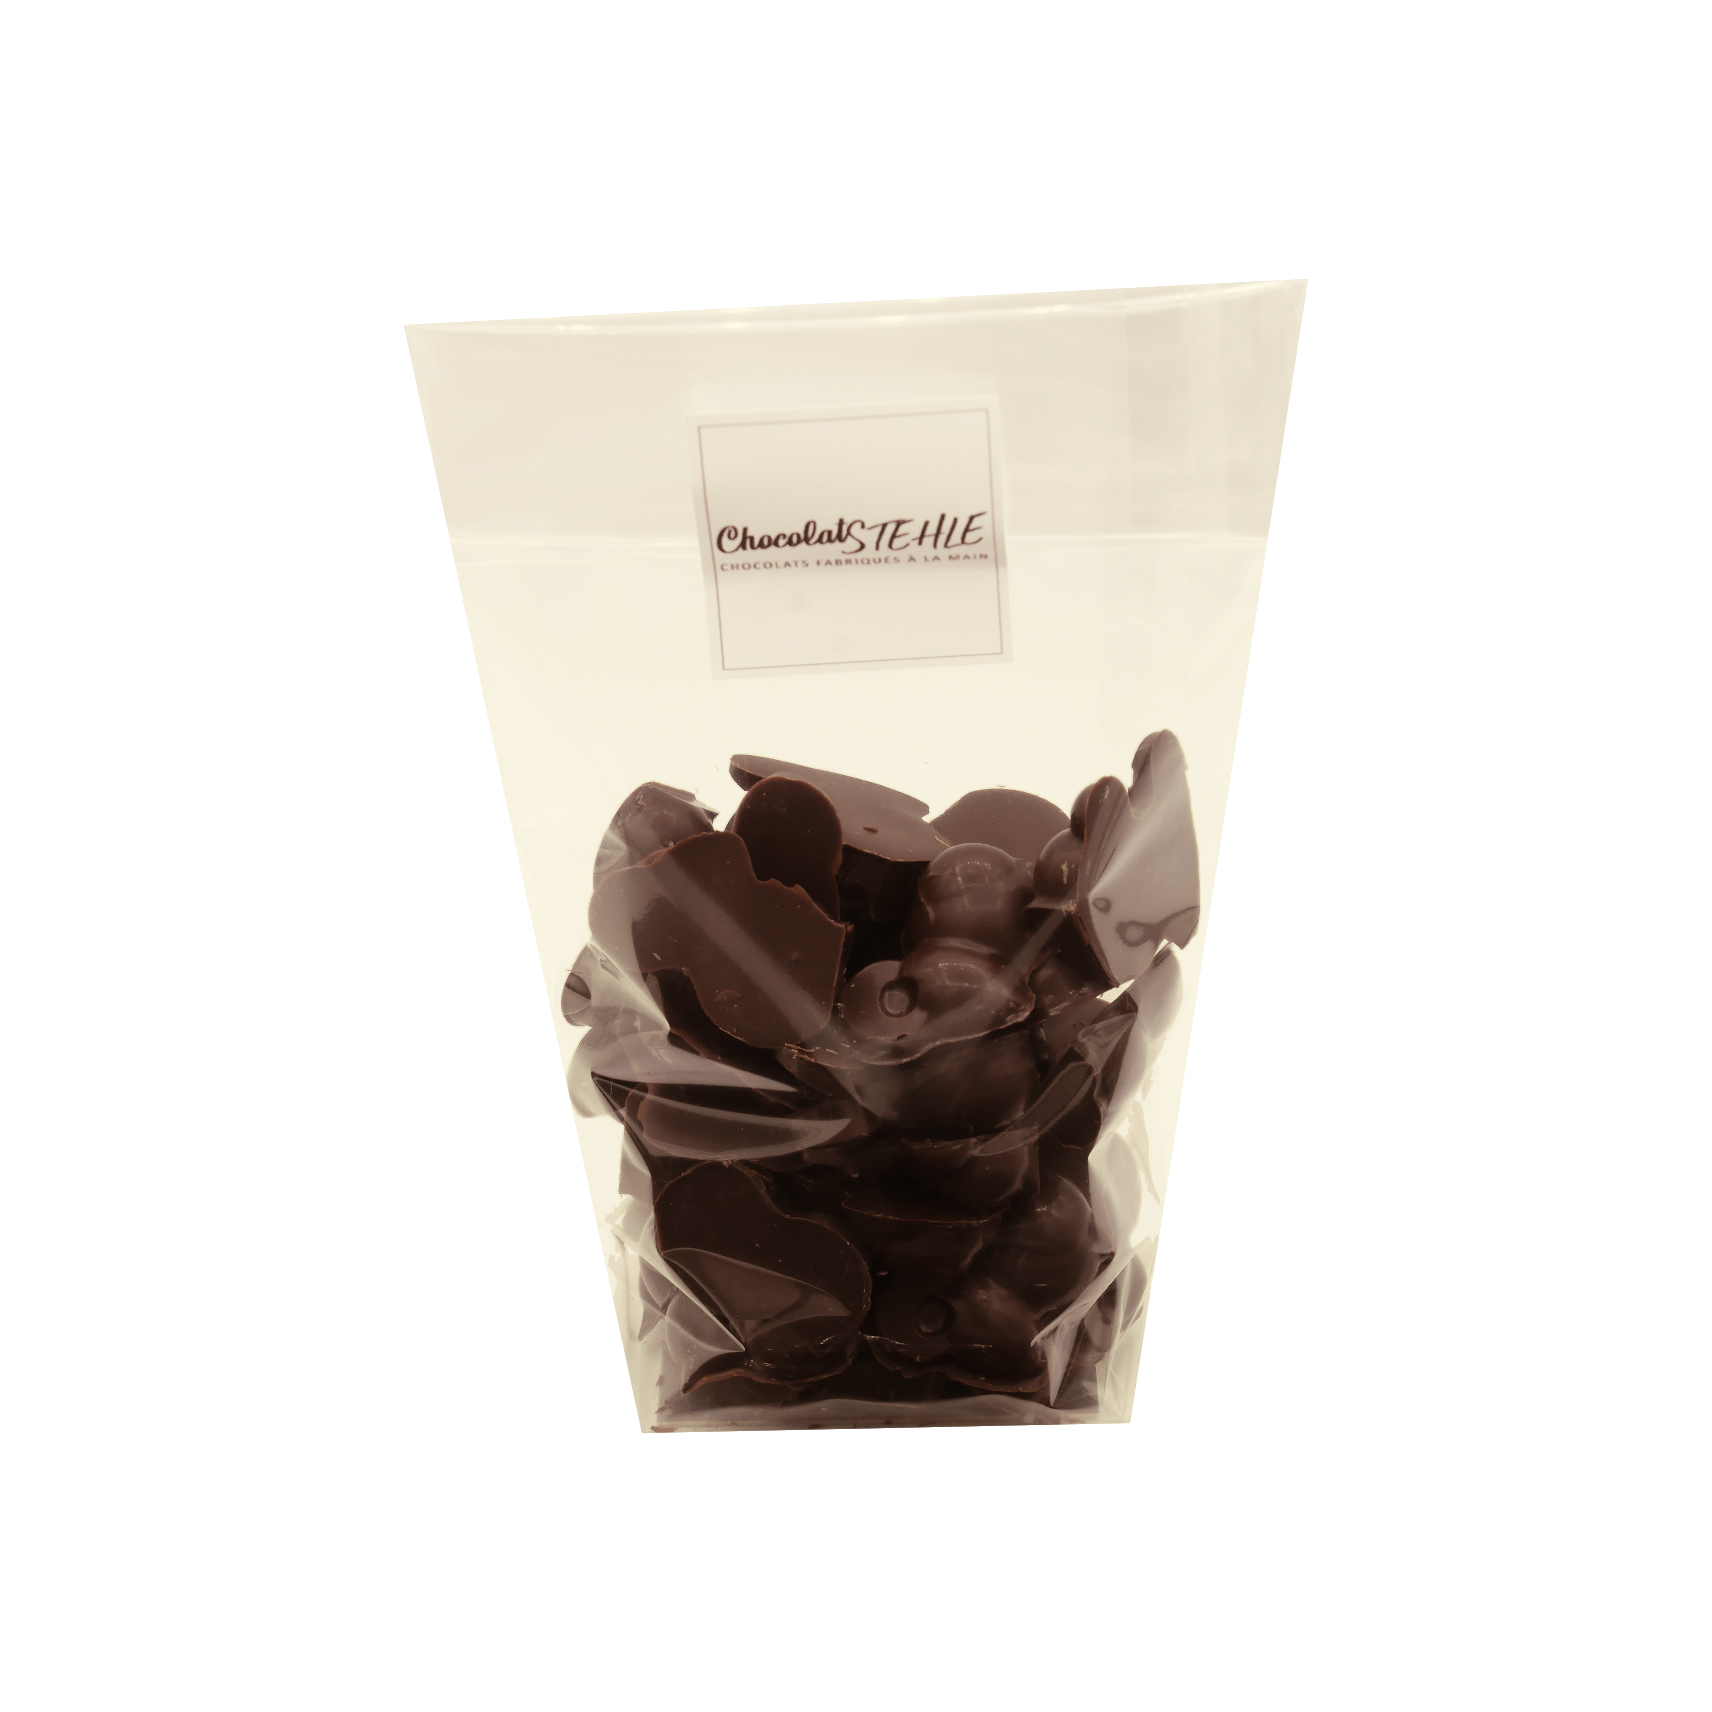 fritures-paques-chocolat-noir-130-g